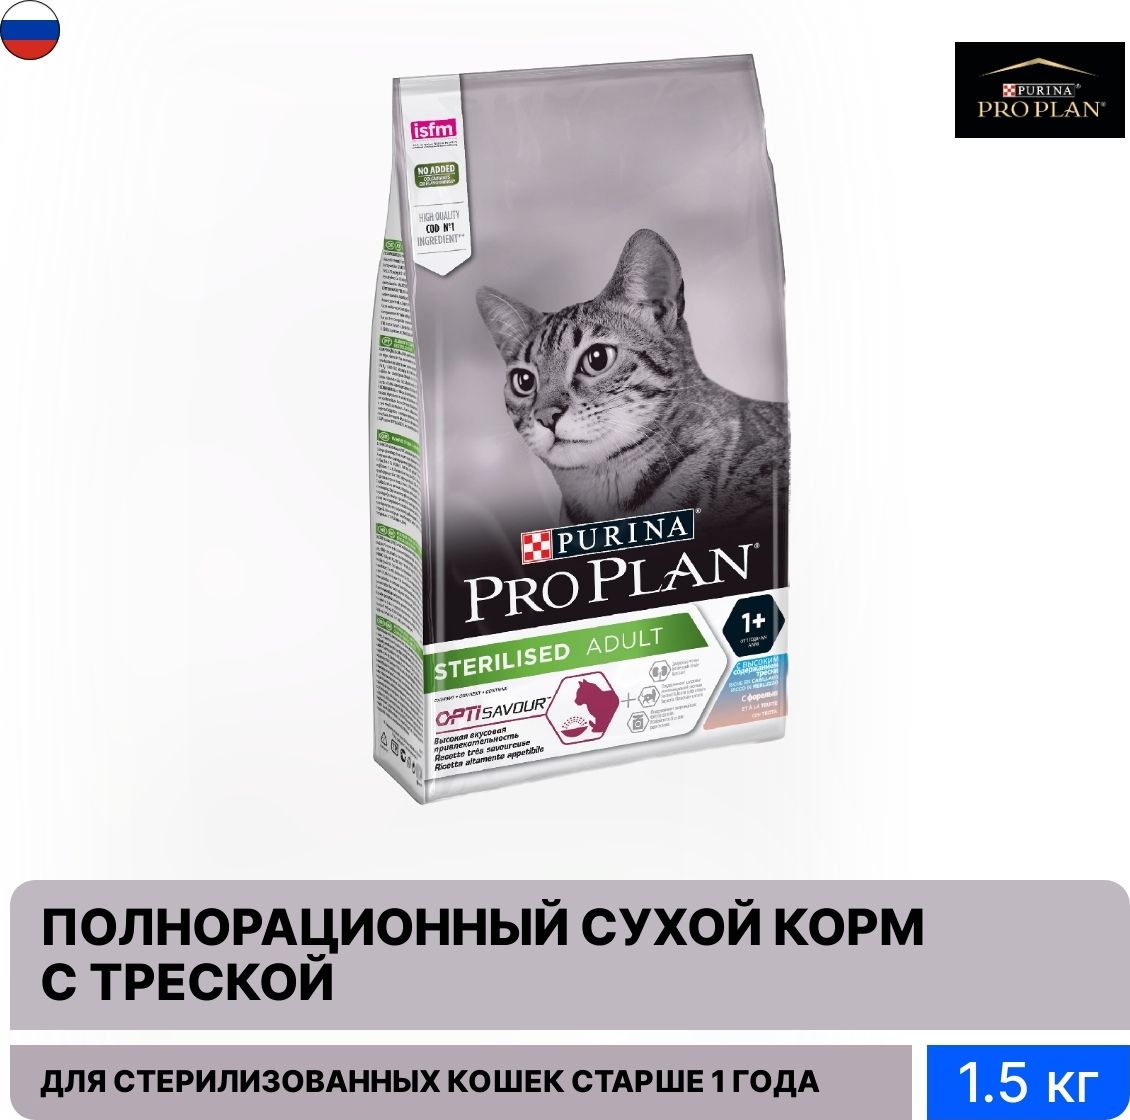 Purina Pro Plan реклама. Pro Plan Live Clear Sterilized 1,4. Purina PROPLAN Baner. Реклама корма Пурина. Pro plan для стерилизованных 7